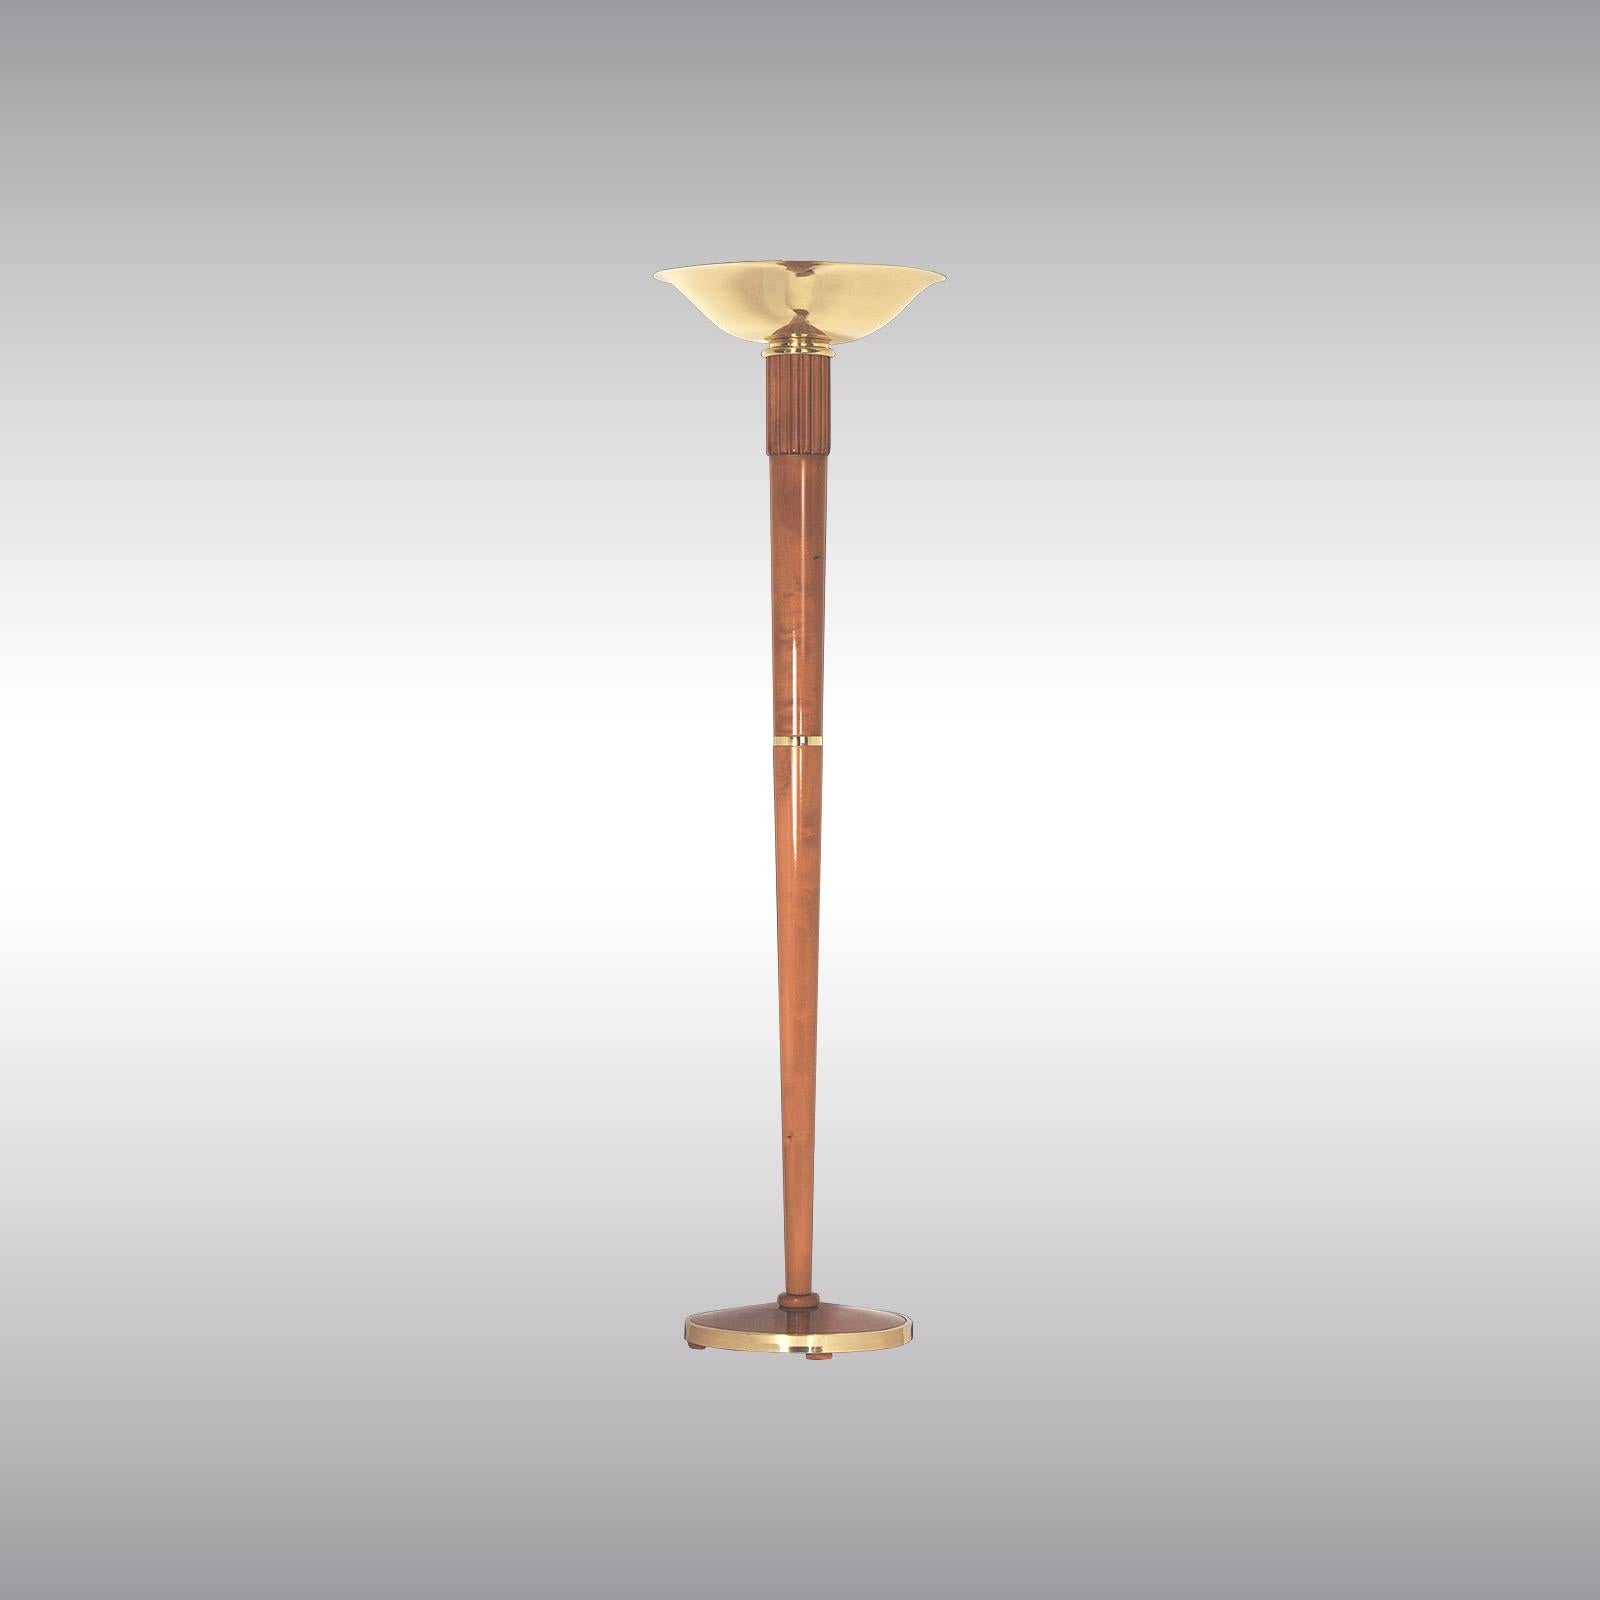 Austrian Art Deco Style, Bauhaus, Wood and Brass Floor Lamp For Sale